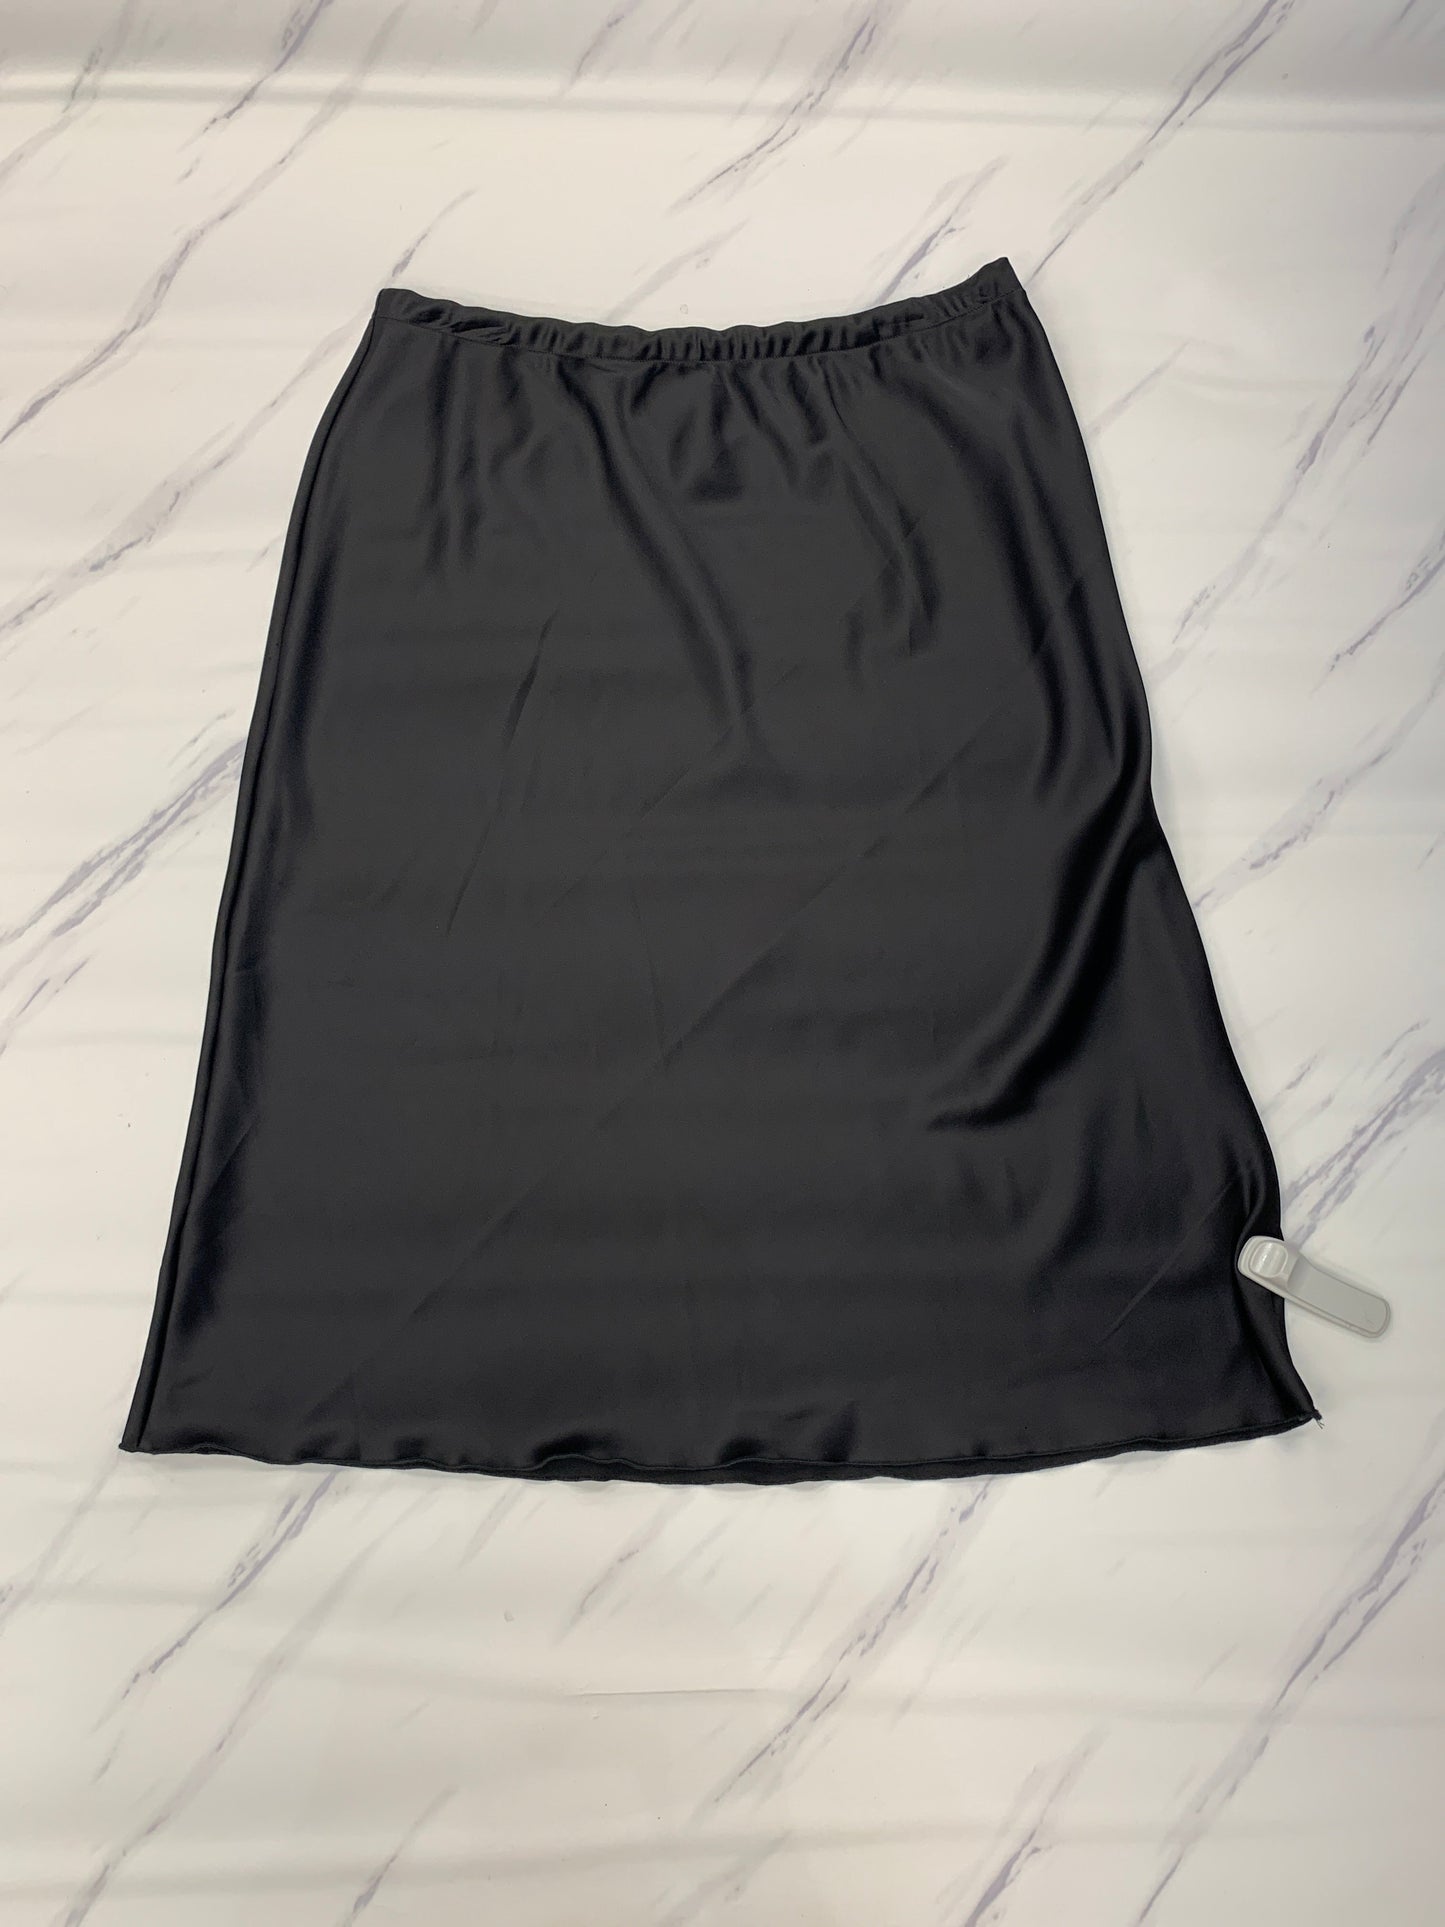 Black Skirt Midi Cmc, Size Xl